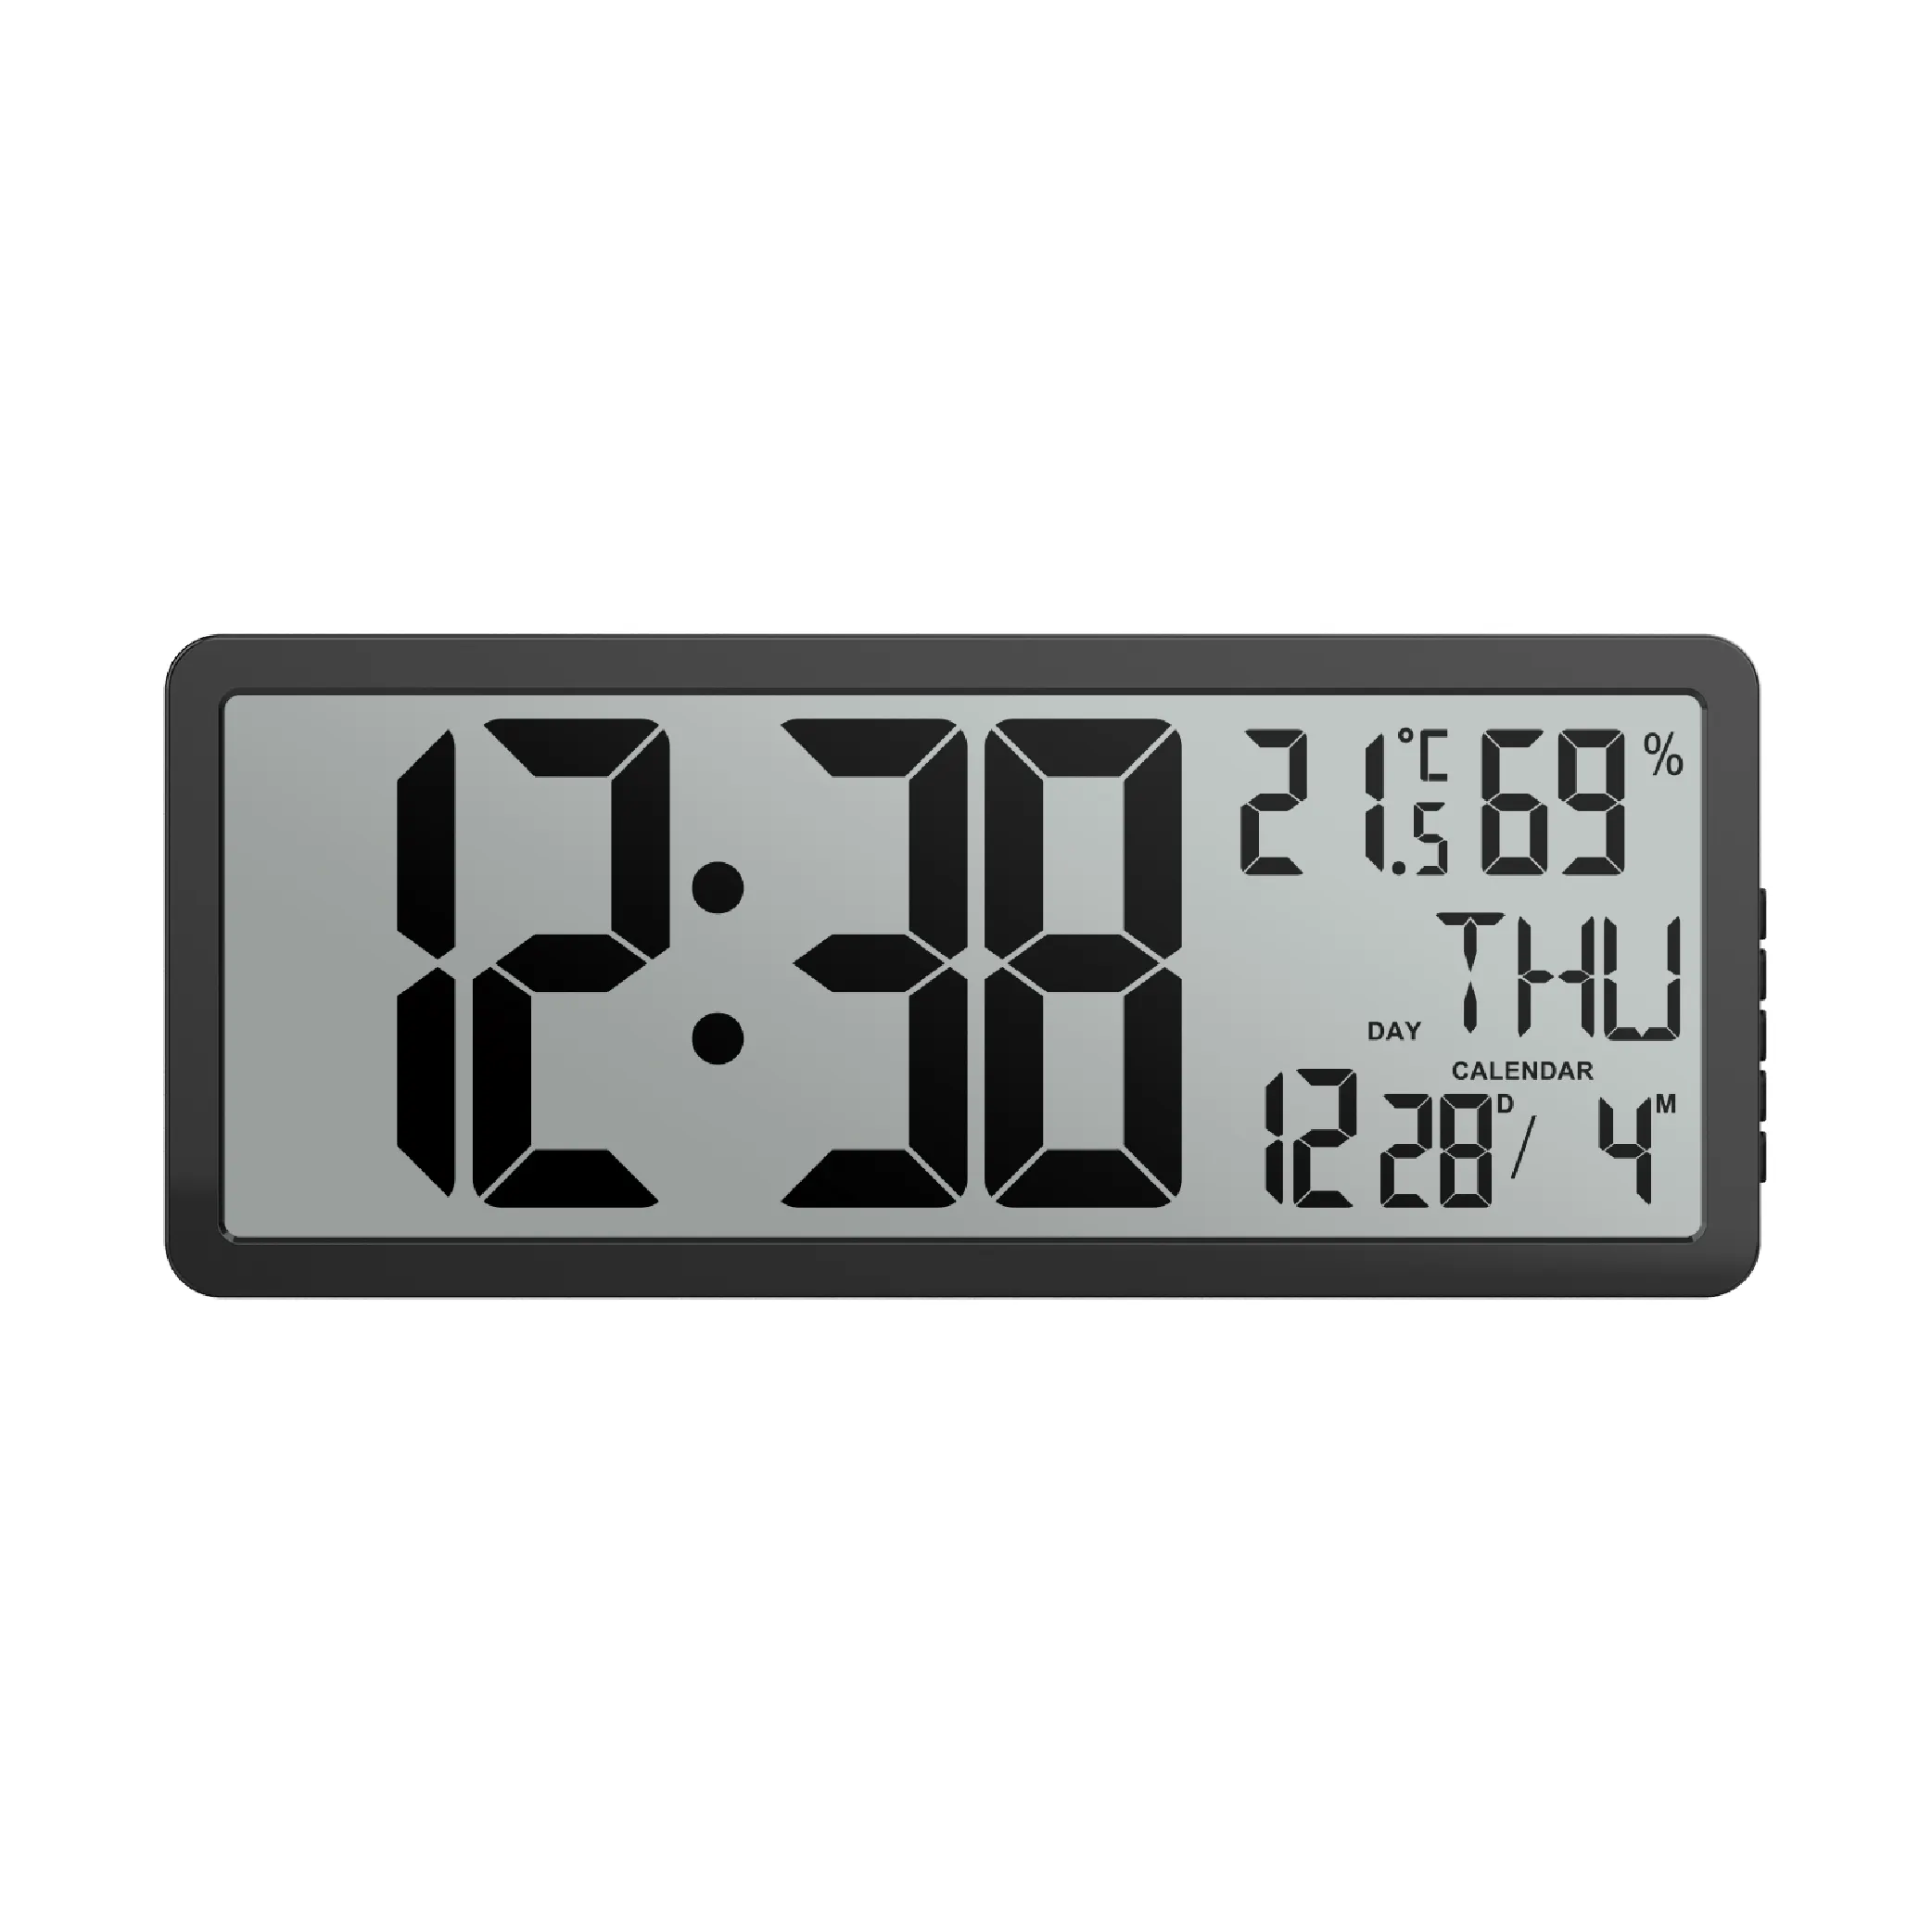 EWETIME Square Wall Clock Series Large Digital Jumbo Alarm Clock LCD Display Multi-functional Upscale Office Decor Desk